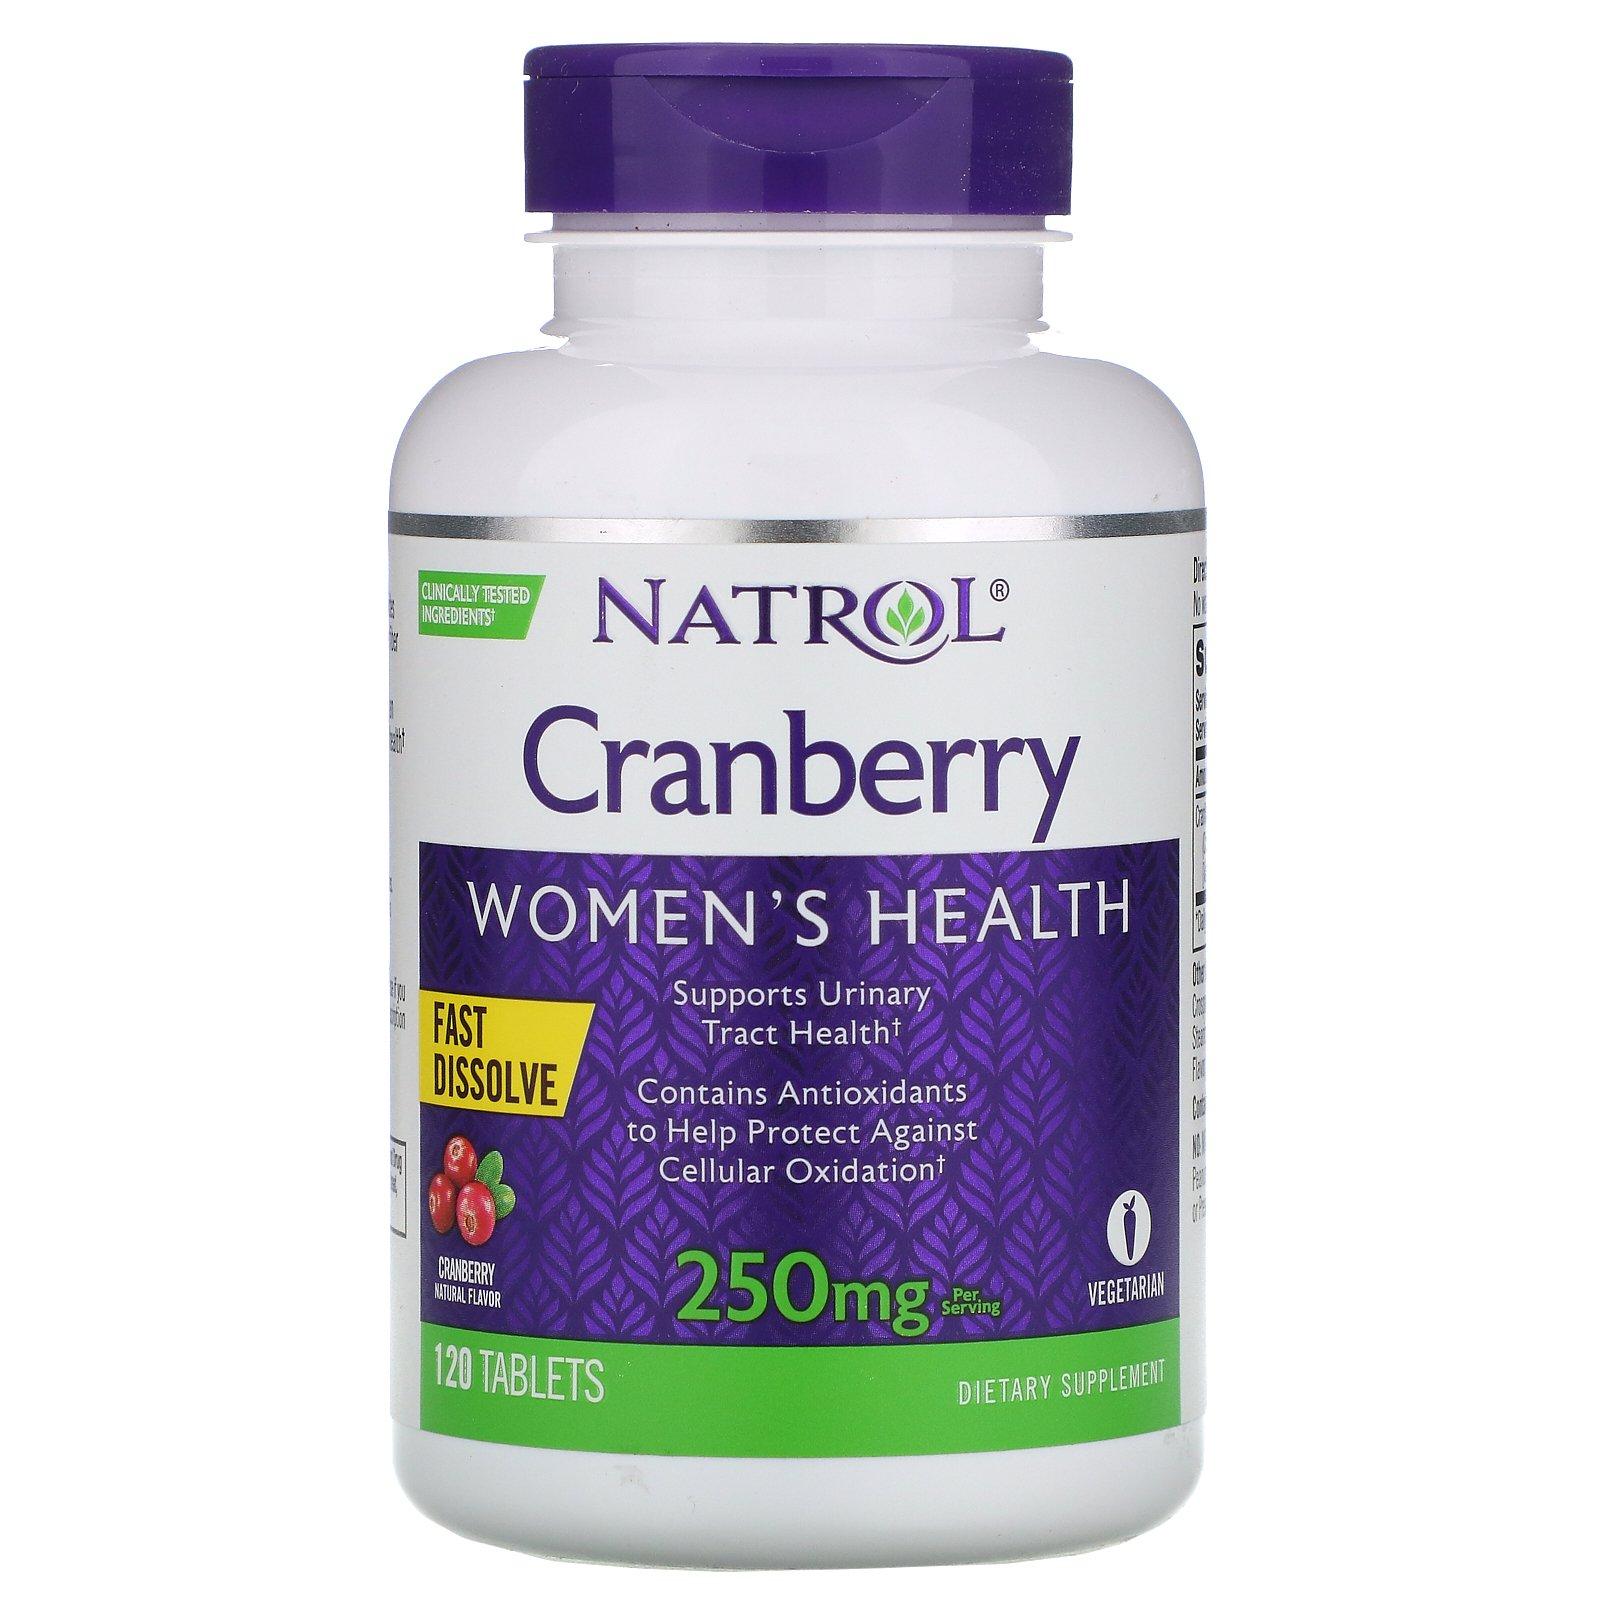 Natrol cranberry